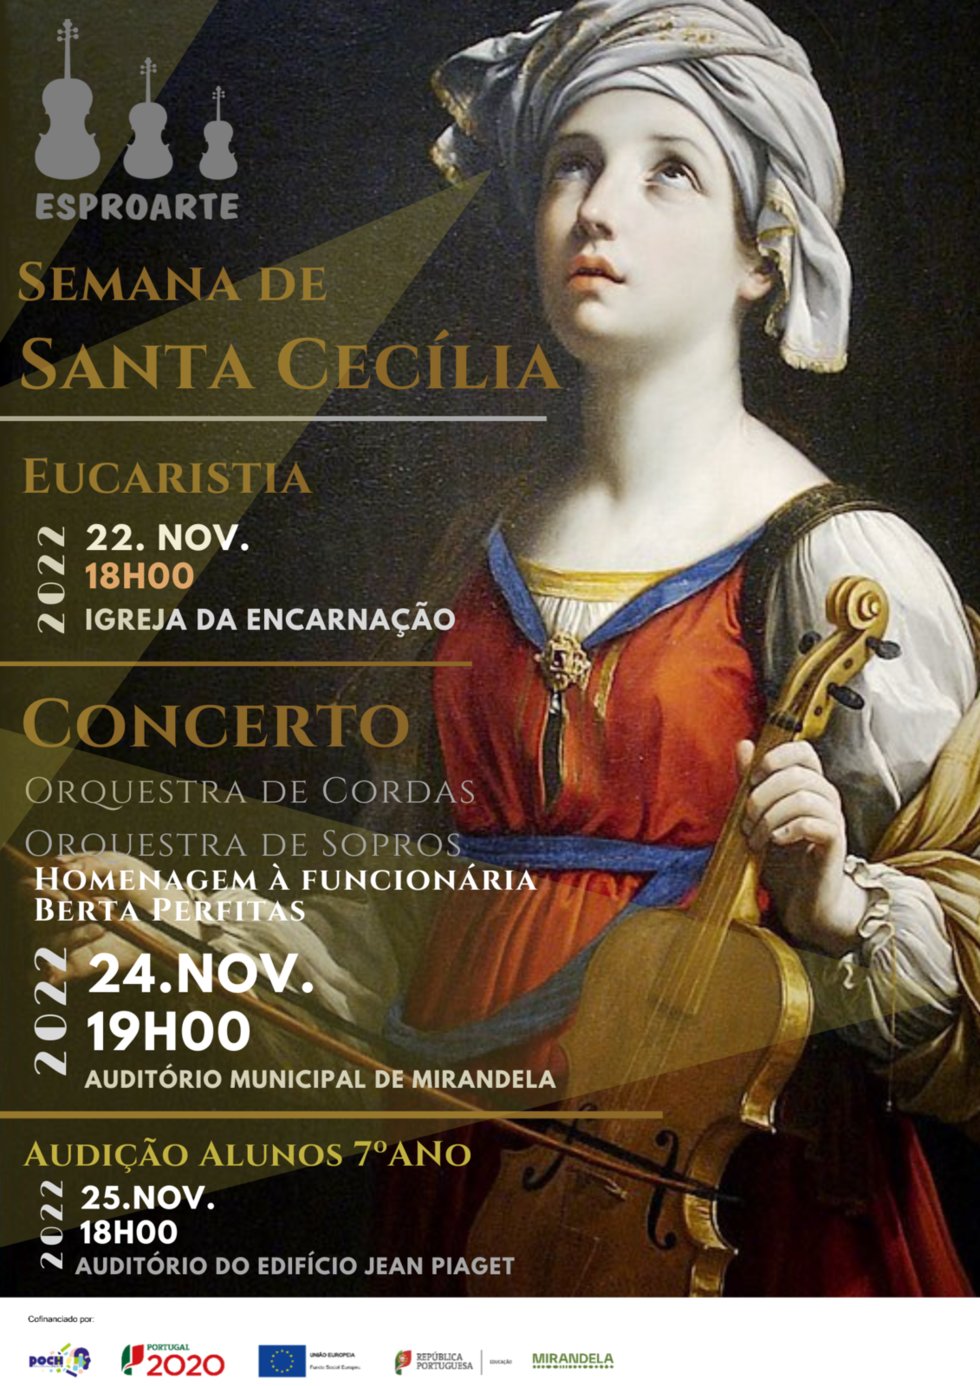 Semana de Santa Cecília